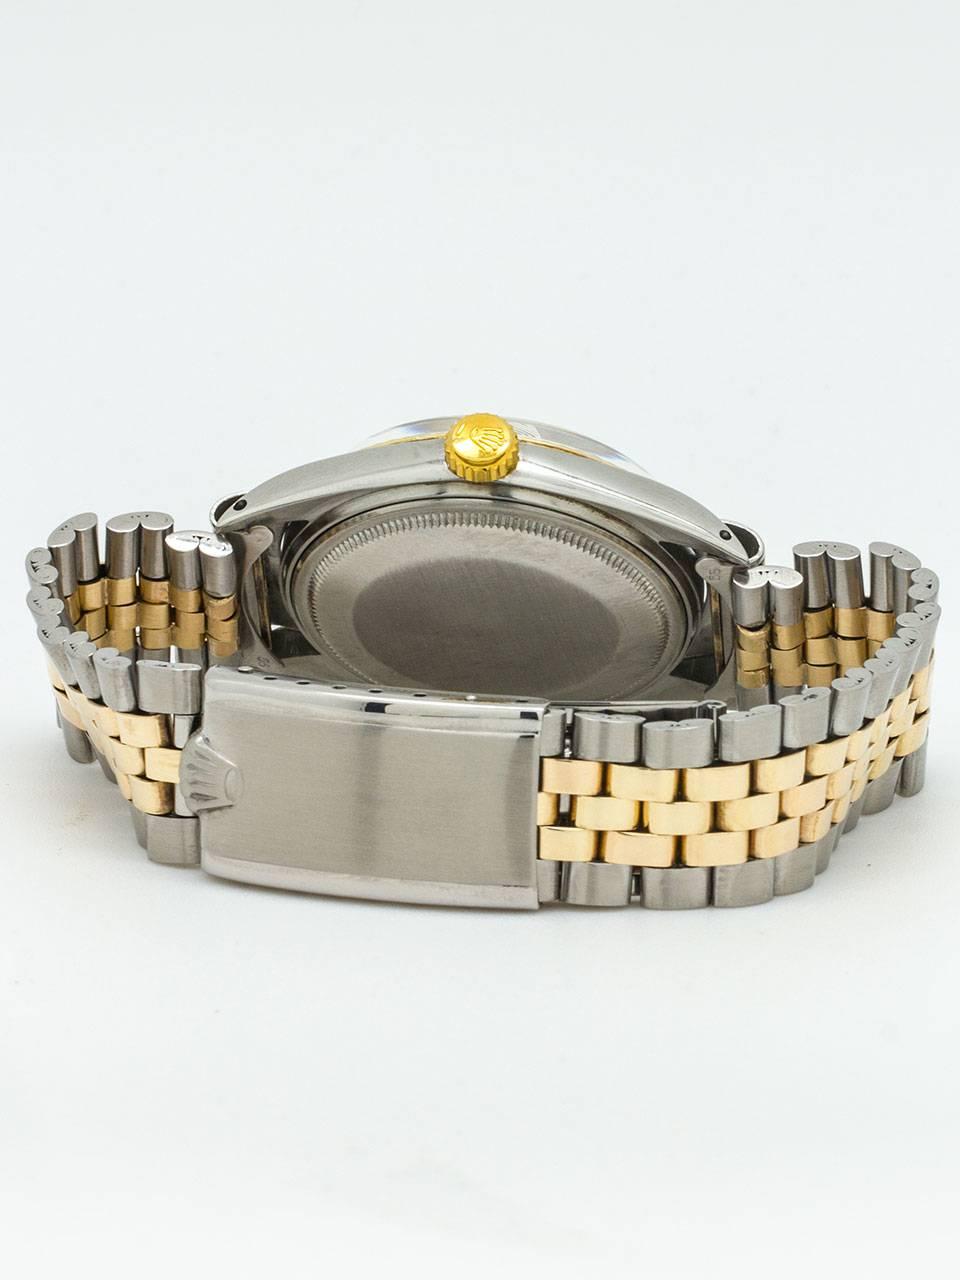 Women's or Men's Rolex Steel and Yellow Gold Datejust Wristwatch ref 1601 circa 